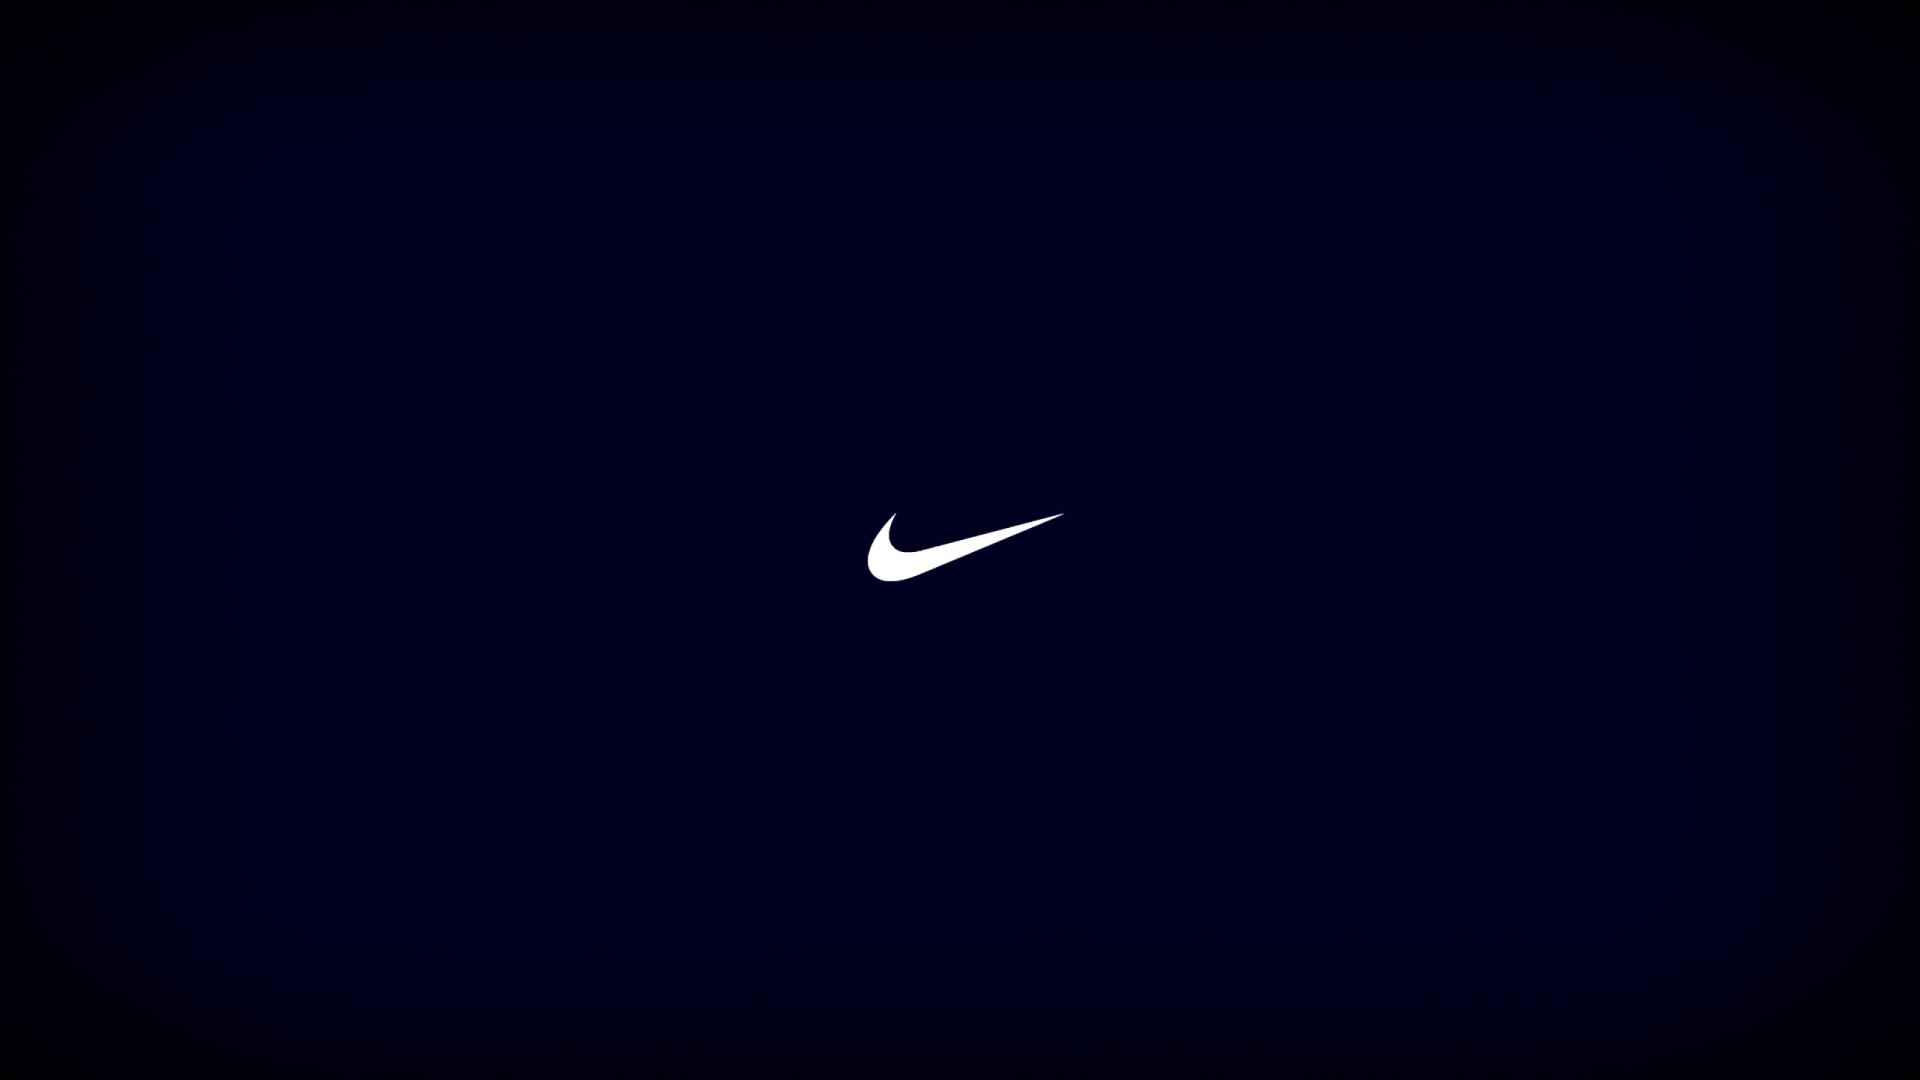 Nike Sport Logo Wallpaper For Android